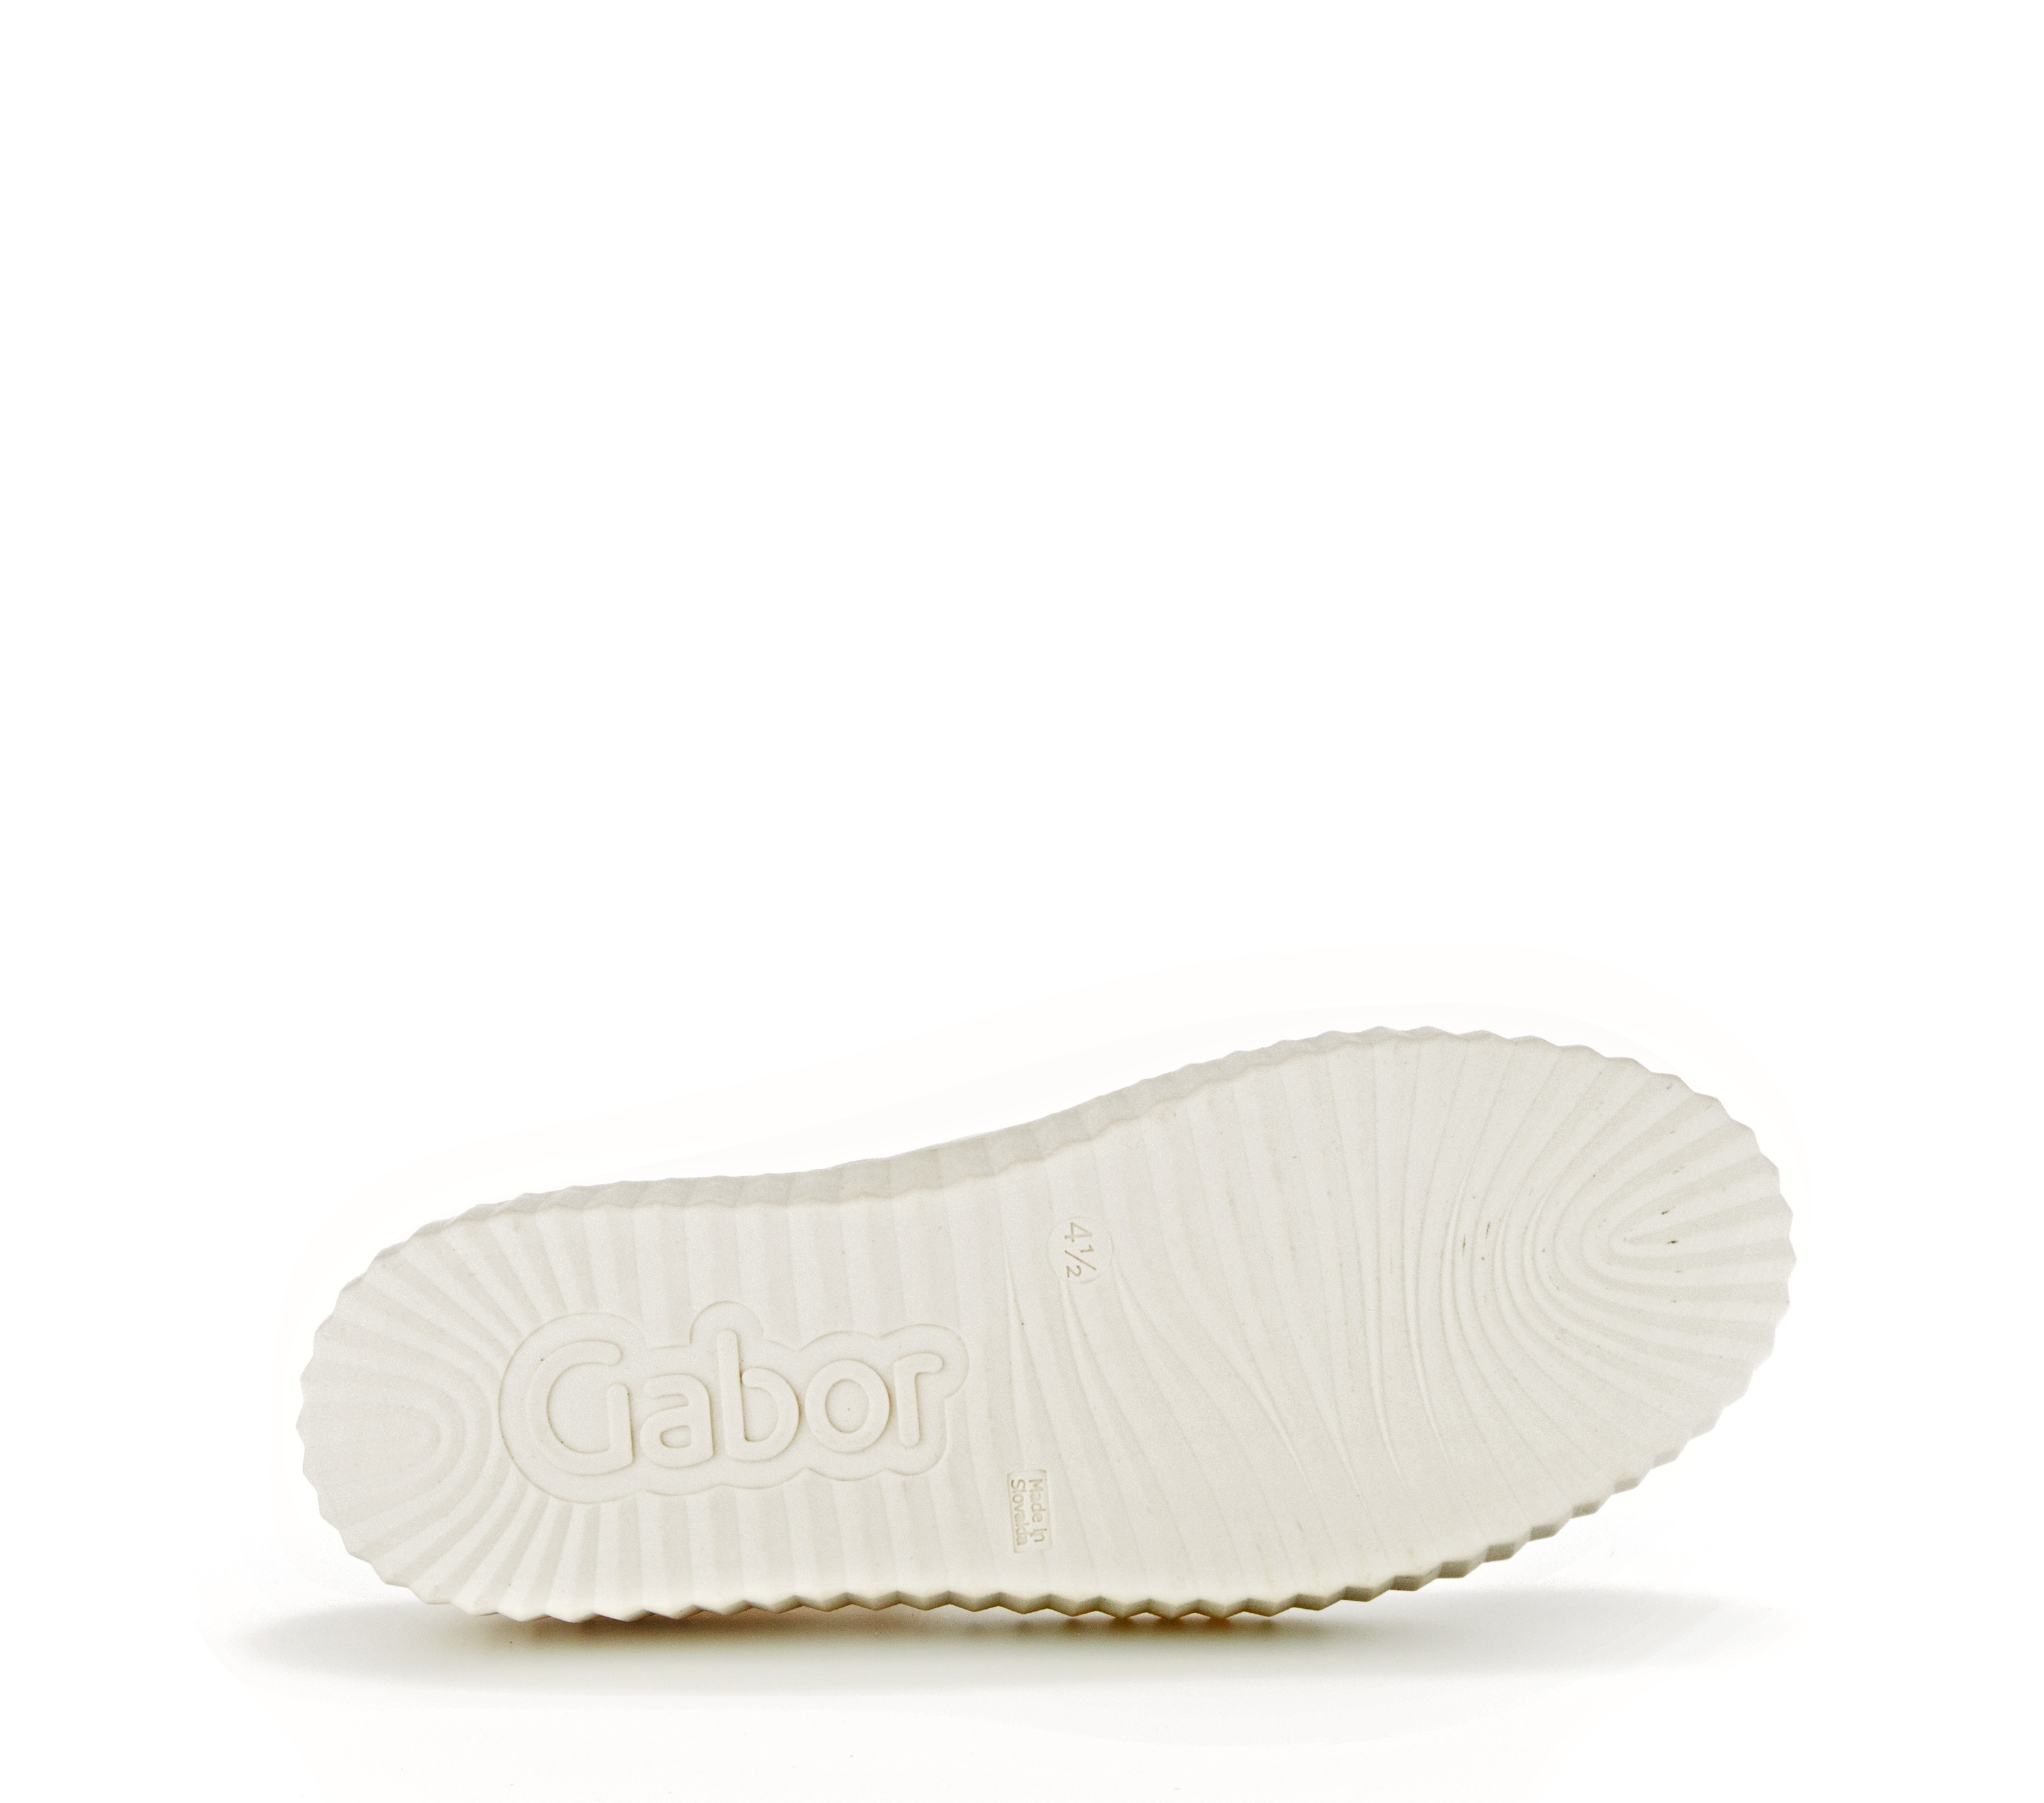 Gabor Shoes Sneaker High - Creme Glattleder